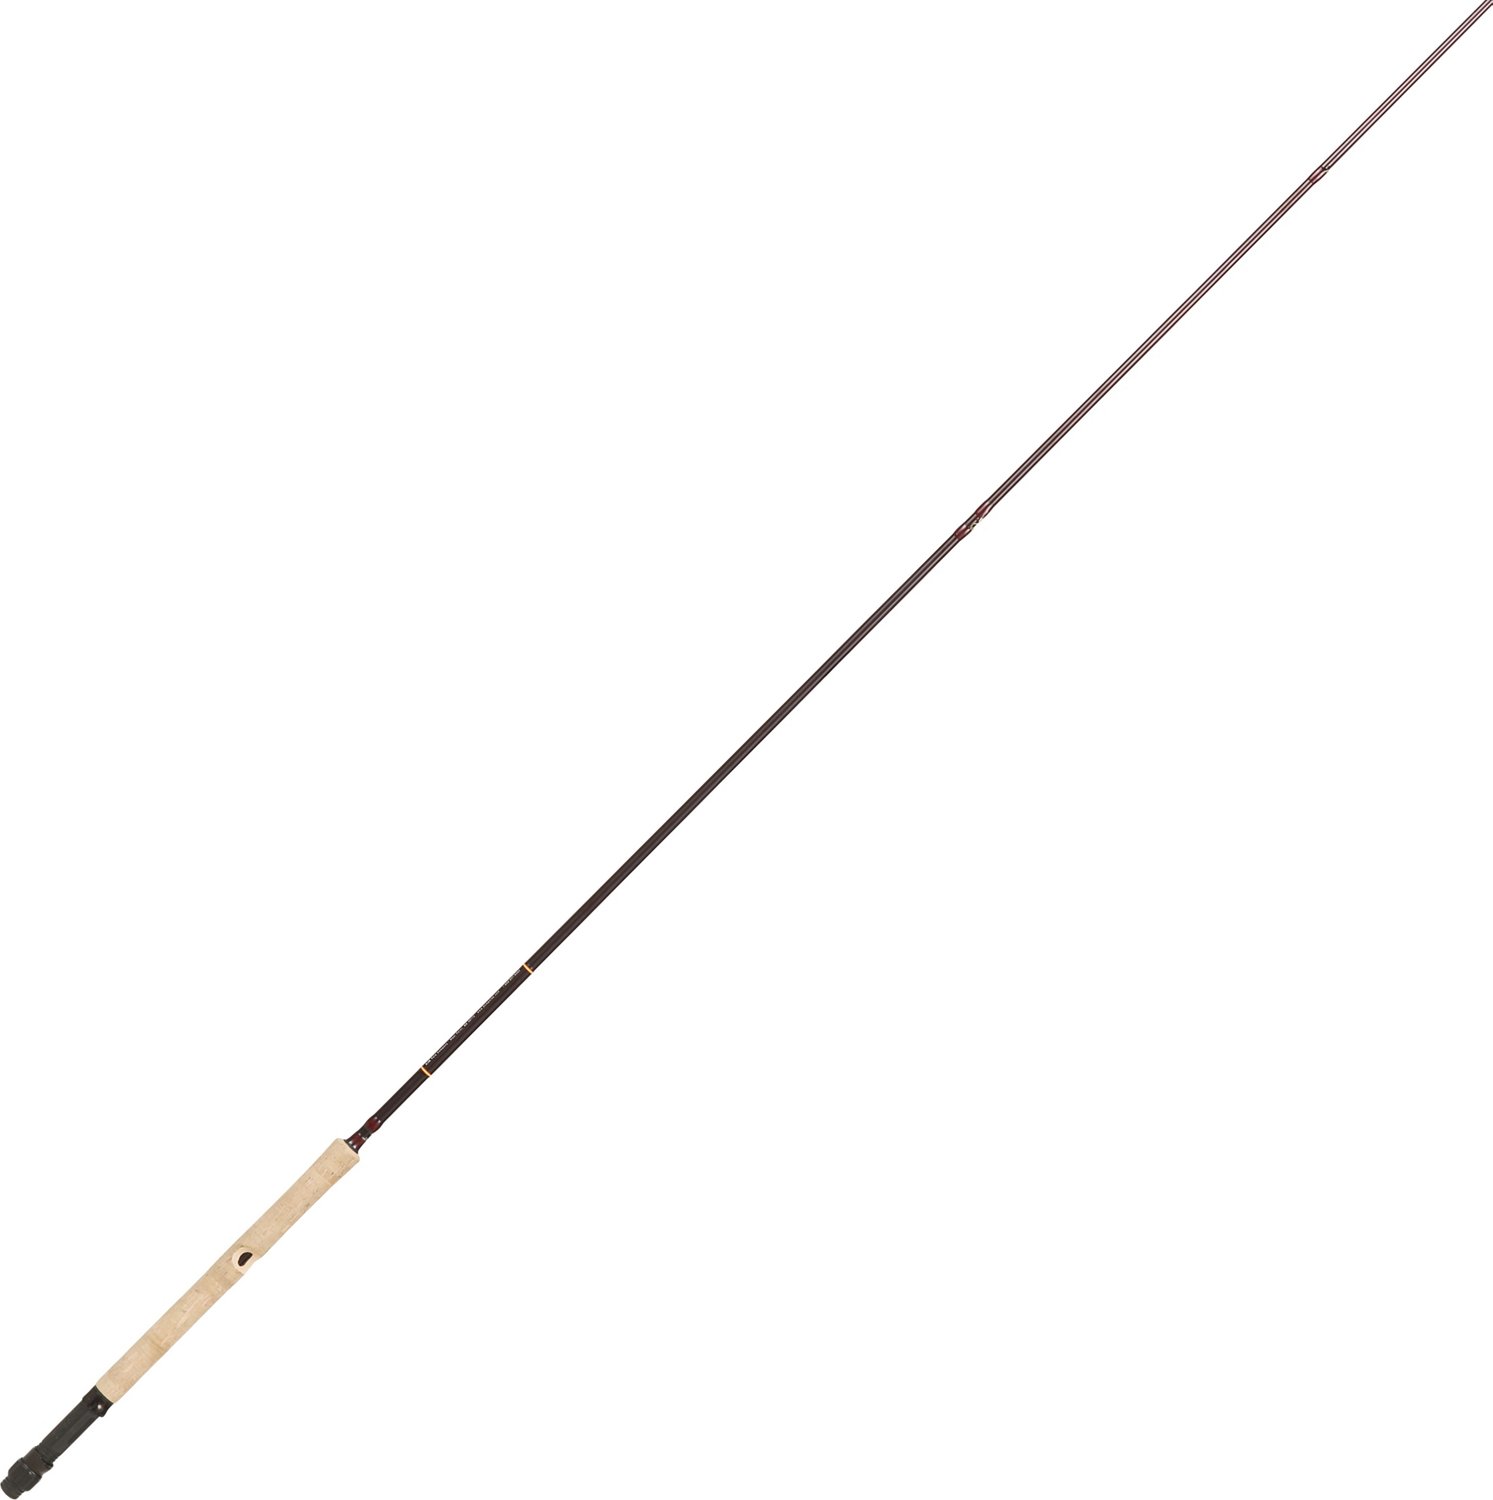 B 'n' M Sam Heaton UL Freshwater Vertical Jig Crappie Fishing Rod